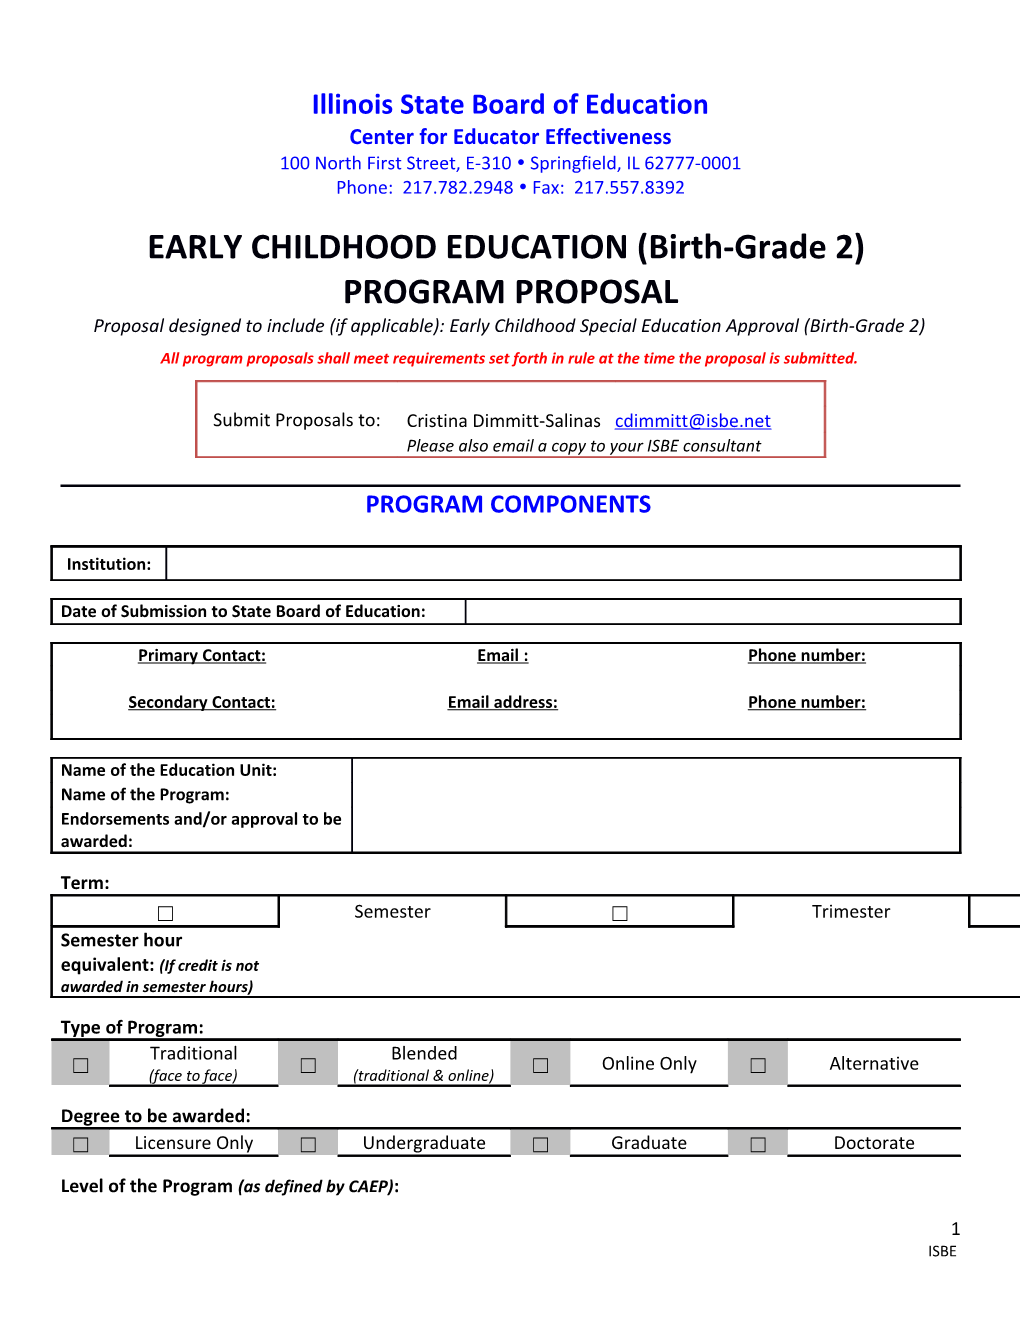 Early Childhood (B-Gr. 2) Program Proposal